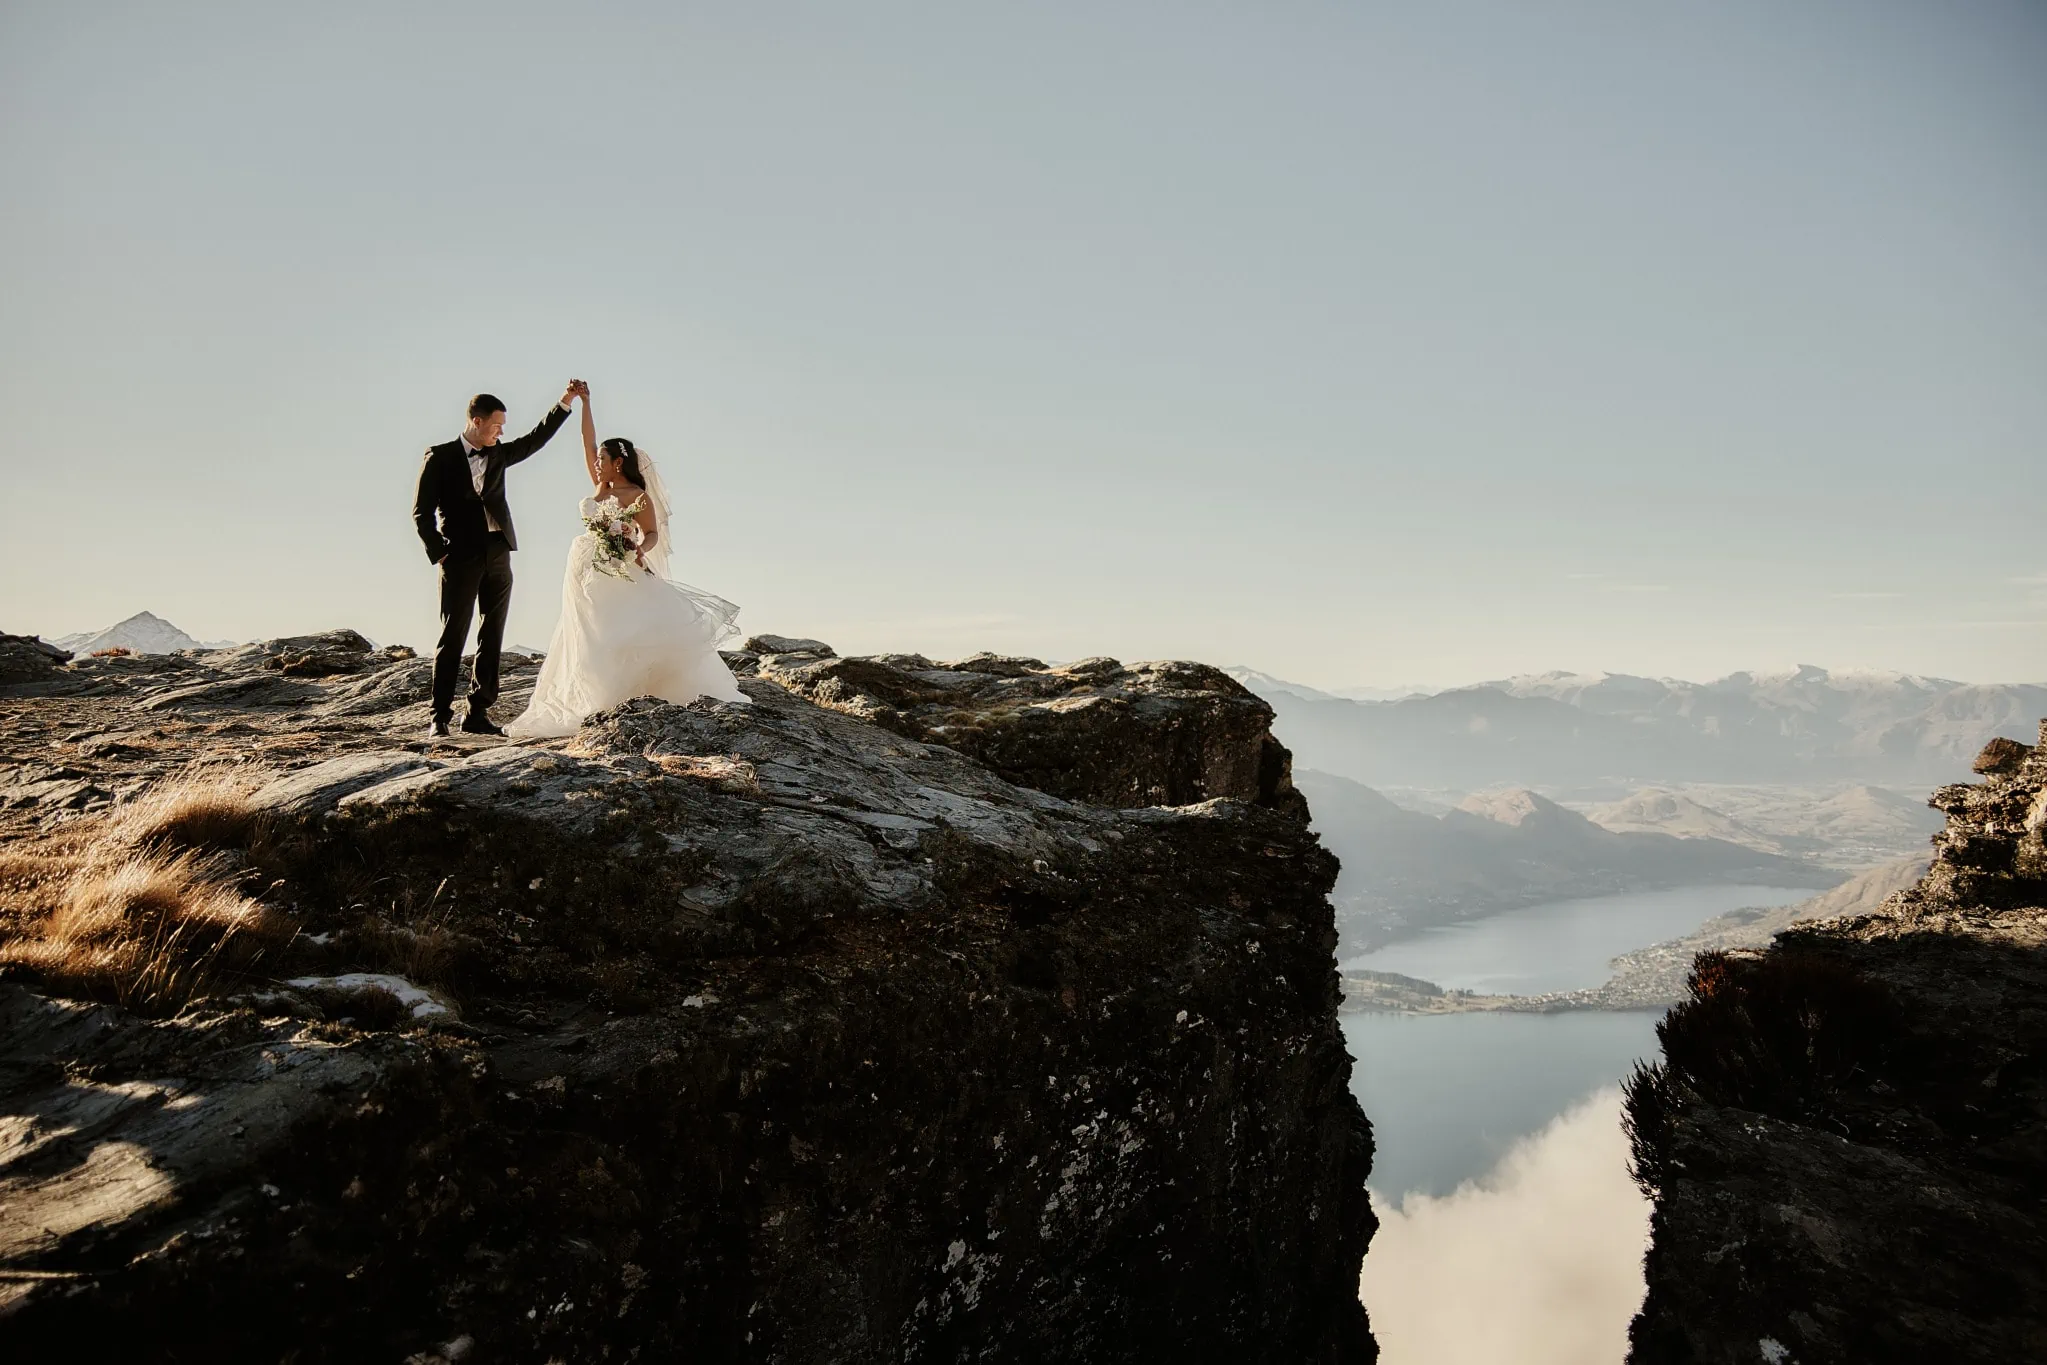 Queenstown New Zealand Elopement Wedding Photographer - Amy and Callum's Queenstown Heli Pre Wedding Shoot captures a bride and groom standing on top of a cliff overlooking Lake Wanaka.